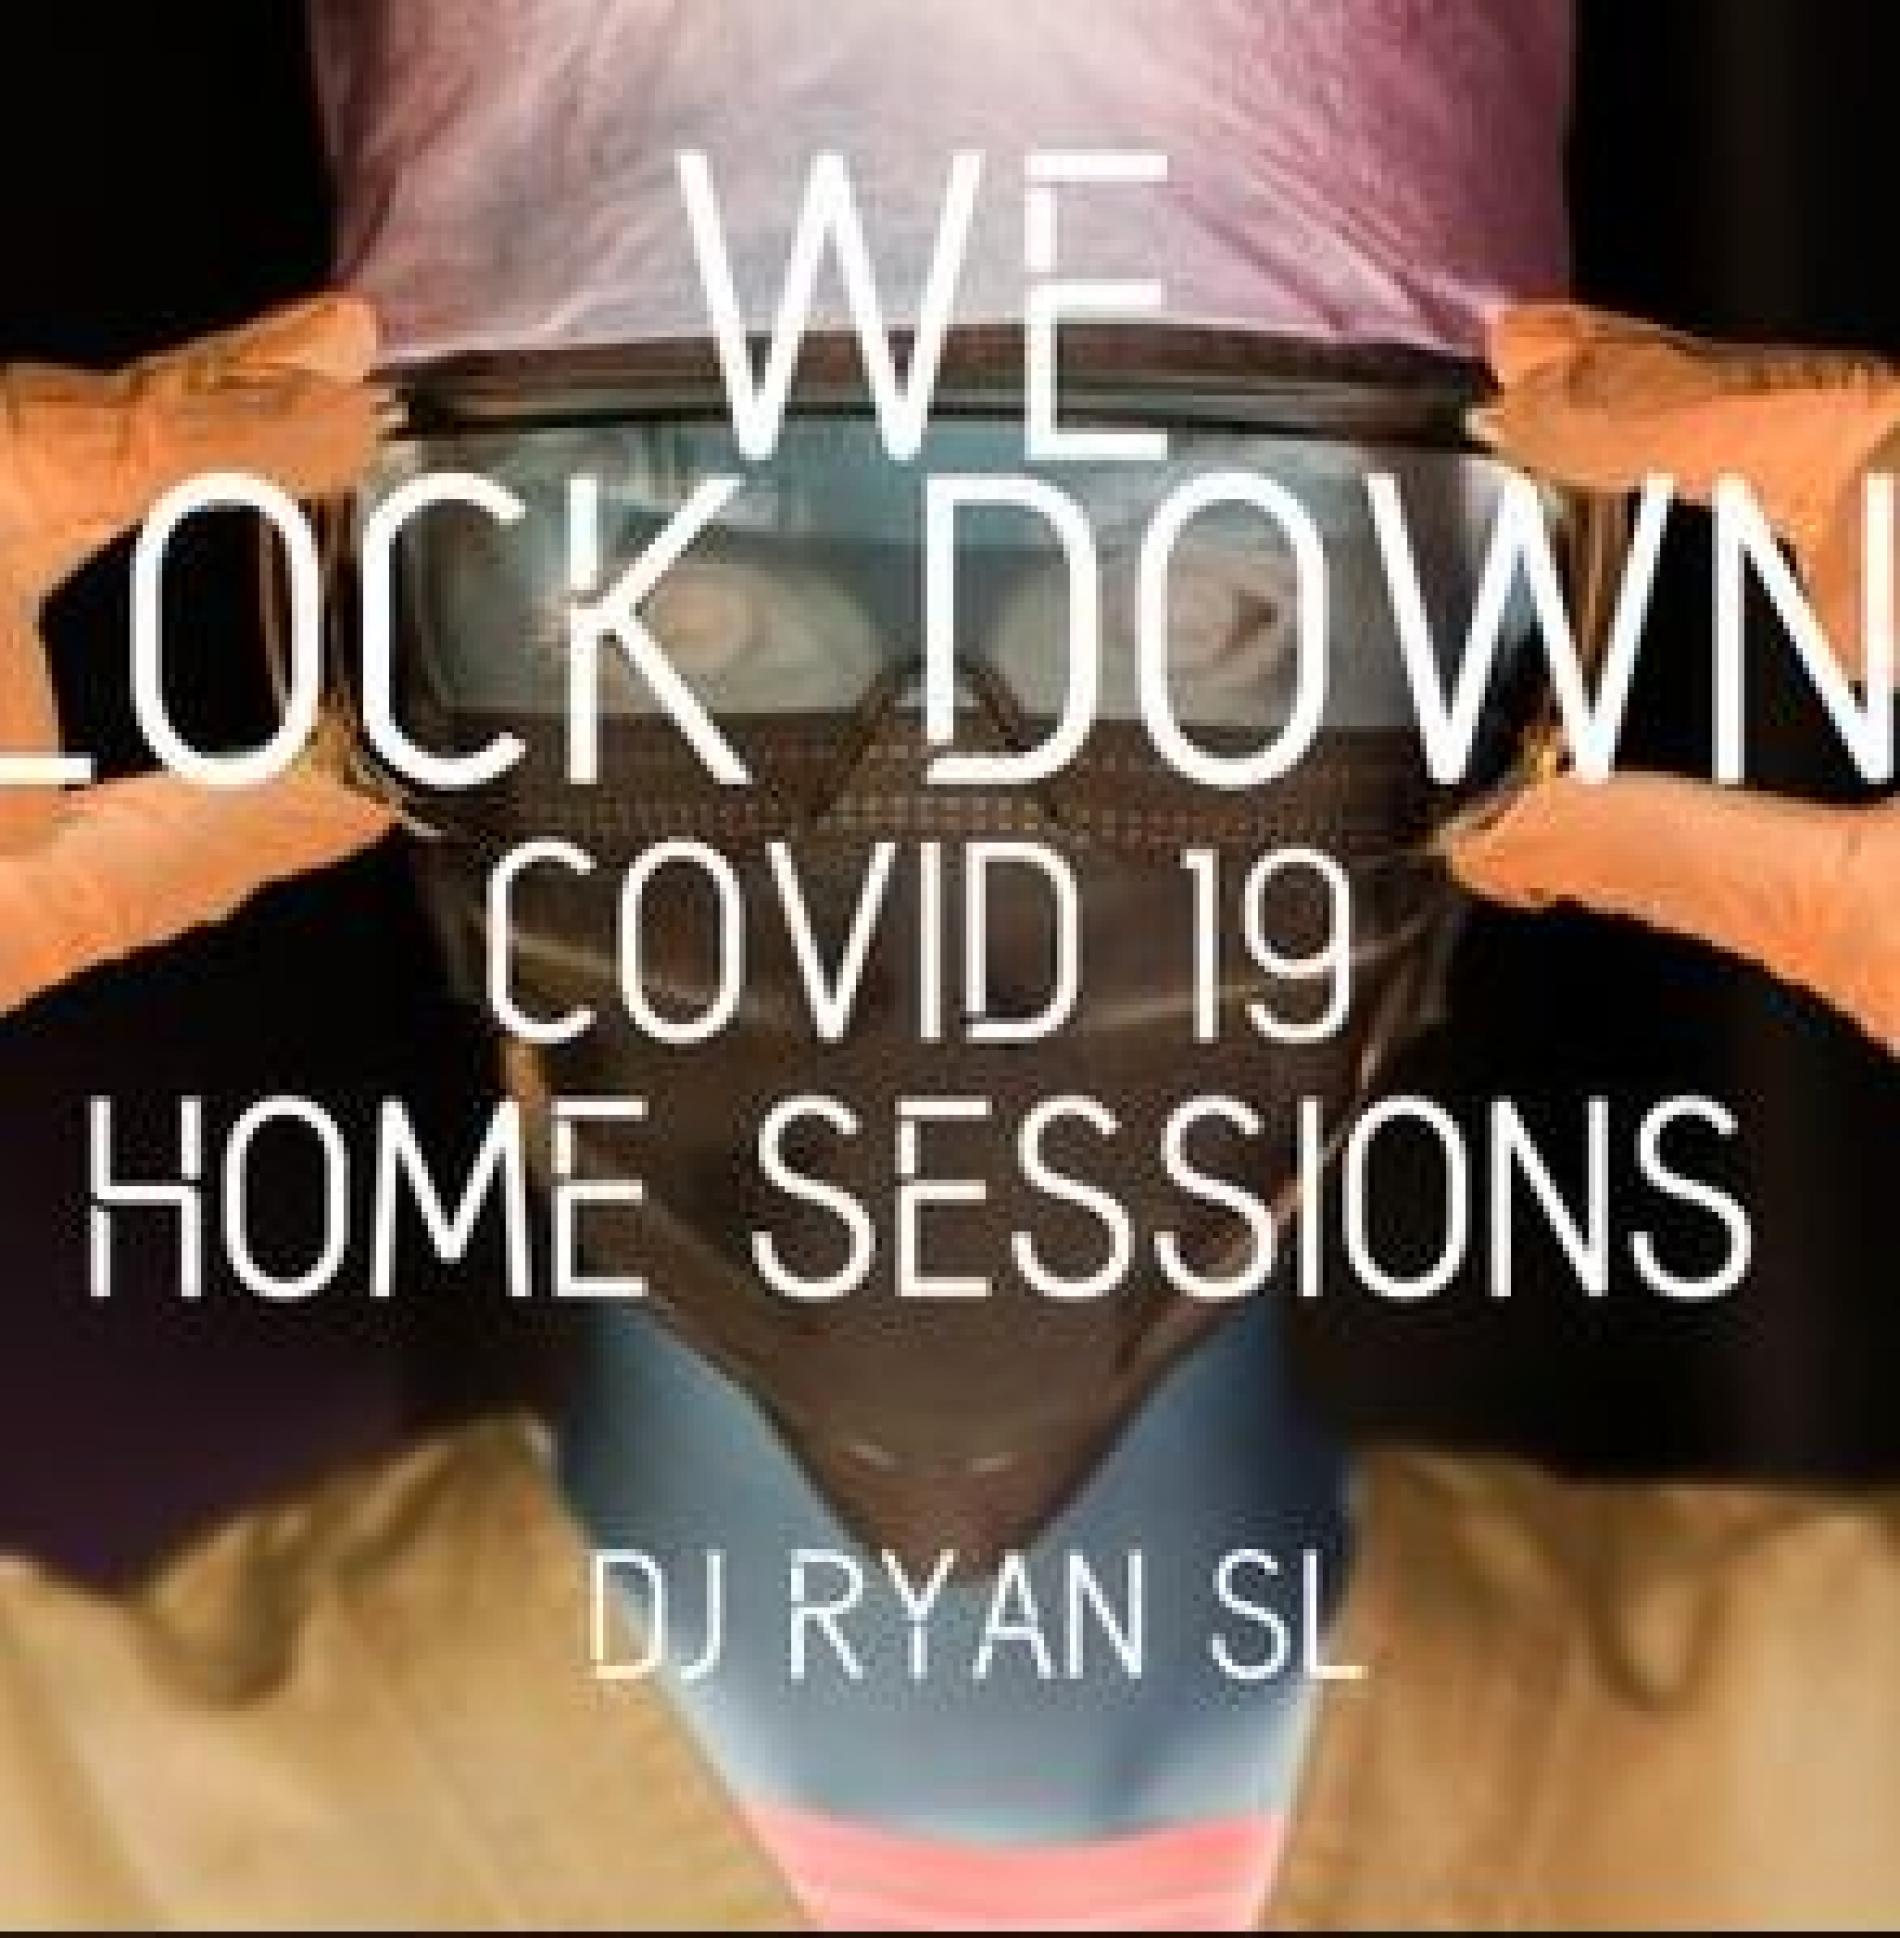 Dj Ryan – WE / LOCK DOWN – COVID 19 Sessions – Progressive